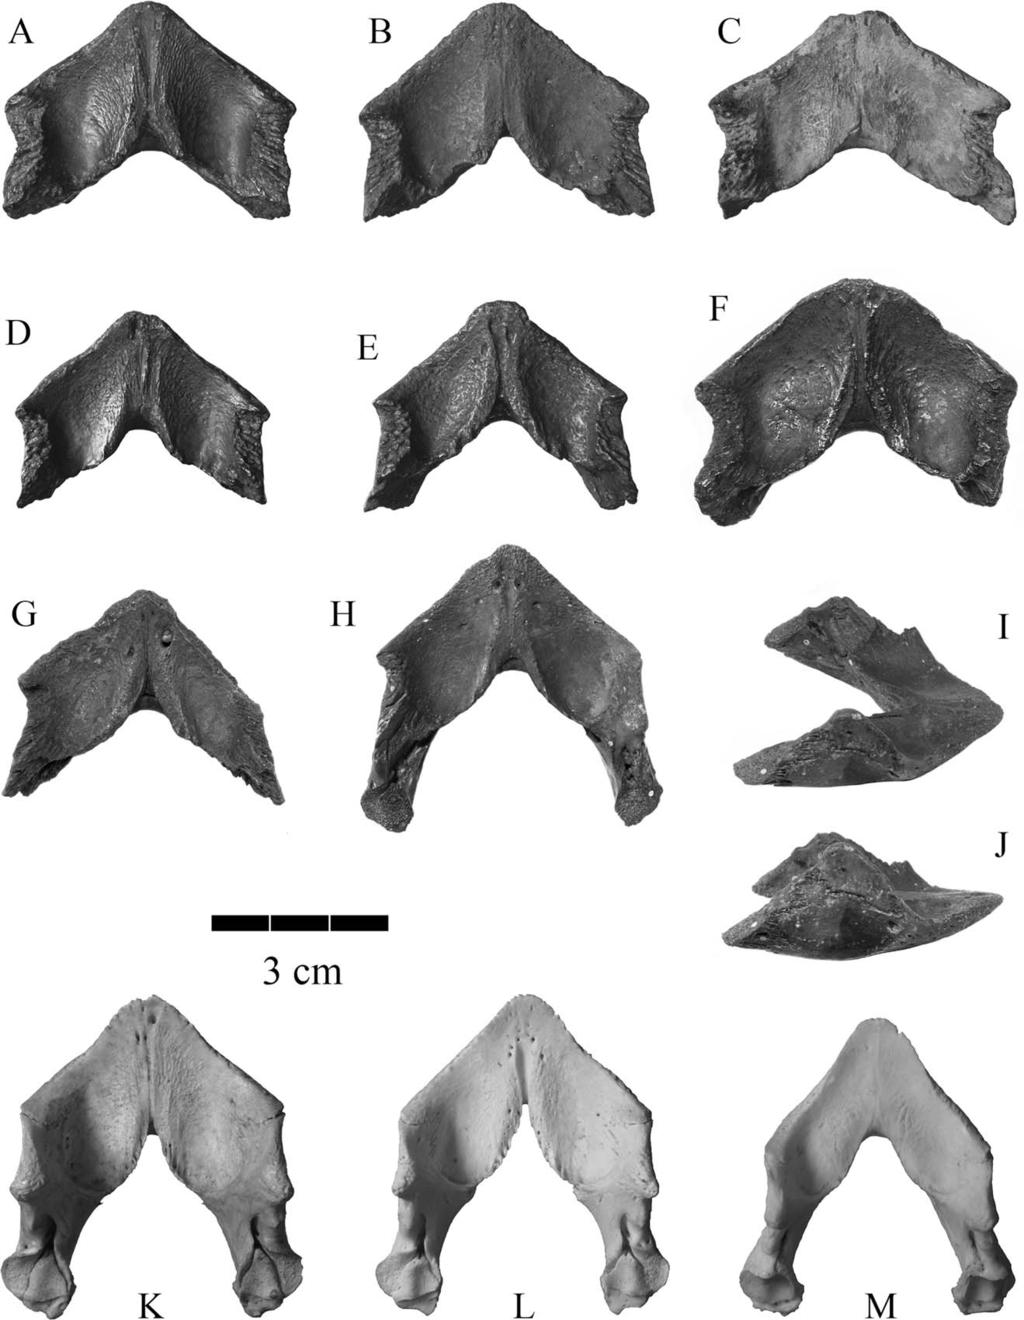 582 JOURNAL OF VERTEBRATE PALEONTOLOGY, VOL. 31, NO. 3, 2011 FIGURE 5. Mandibles of Graptemys kerneri, Graptemys barbouri, and Graptemys ernsti for comparison in dorsal view. A, G.